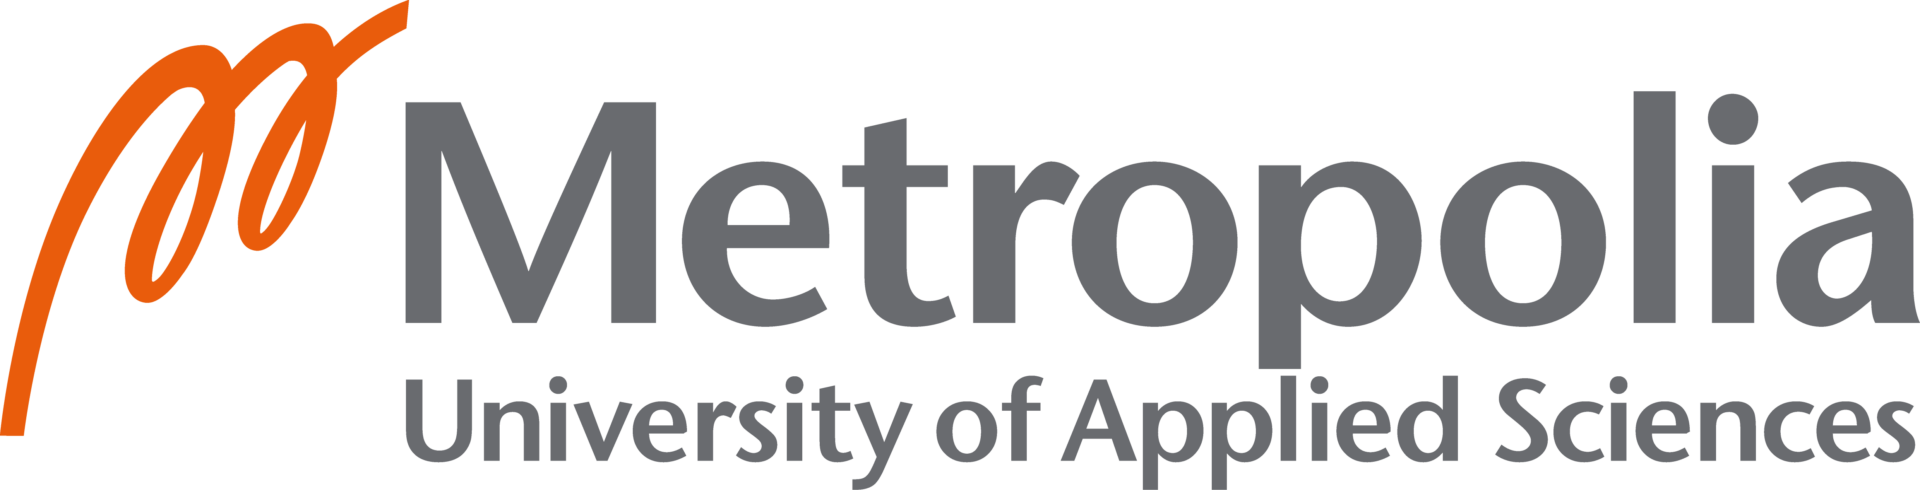 metropolia university of applied sciences logo